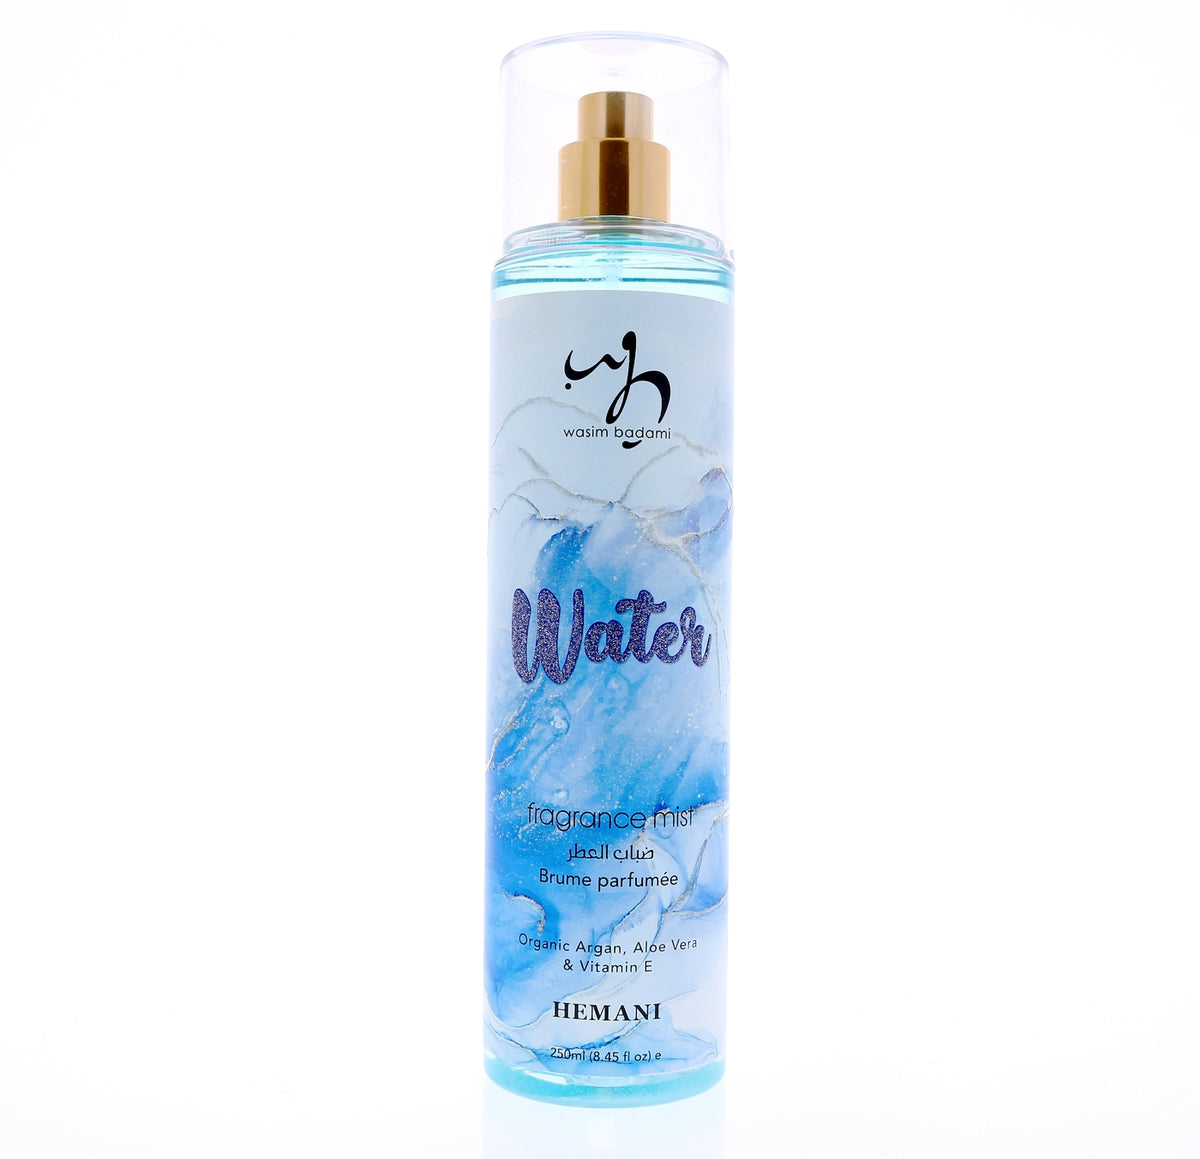 wb-hemani-water-fine-fragrance-mist-250ml-1